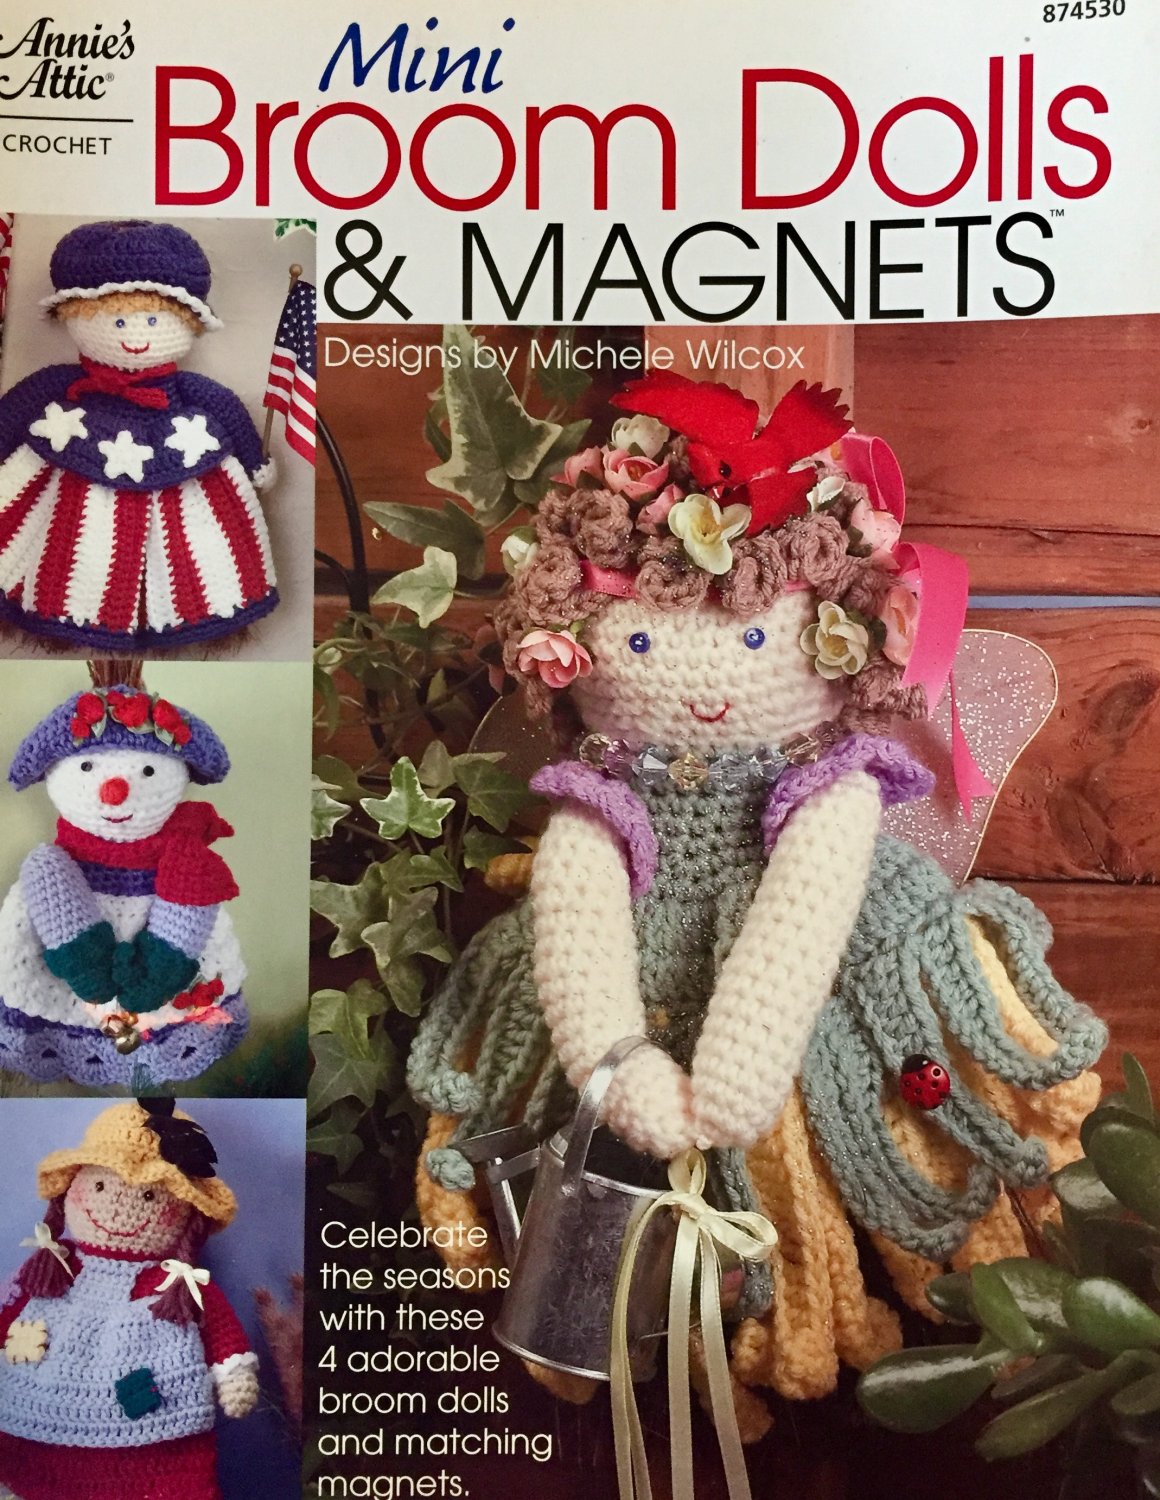 Mini Broom Dolls & Magnets Annie's Attic 874530 Crochet Pattern Designed by Michele Wilcox